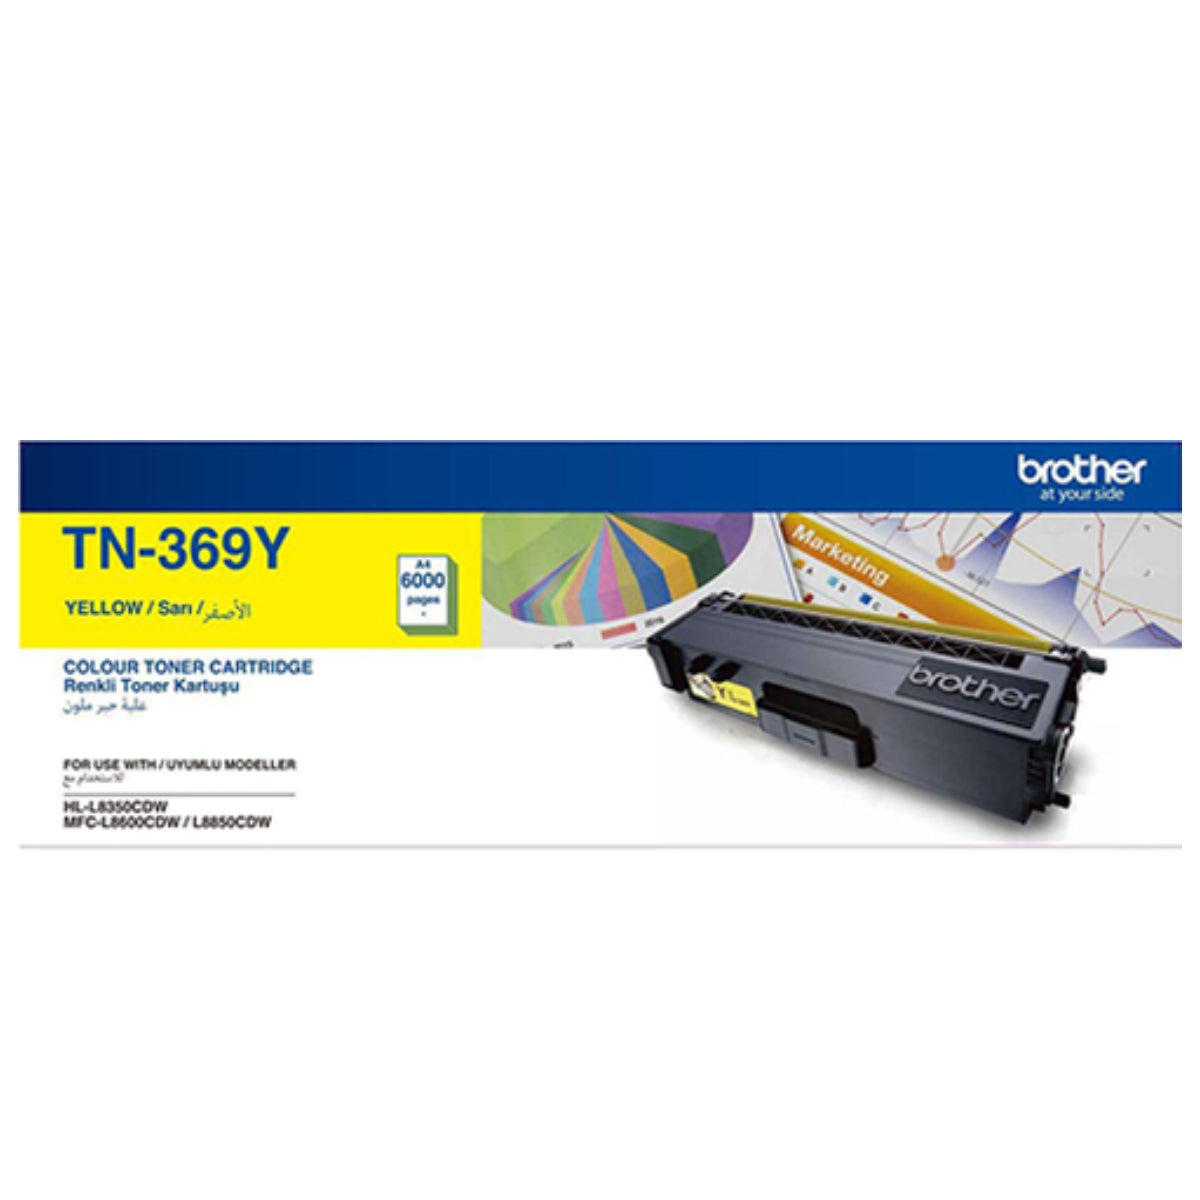 Brother TN-369Y Yellow High Yield Toner Cartridge